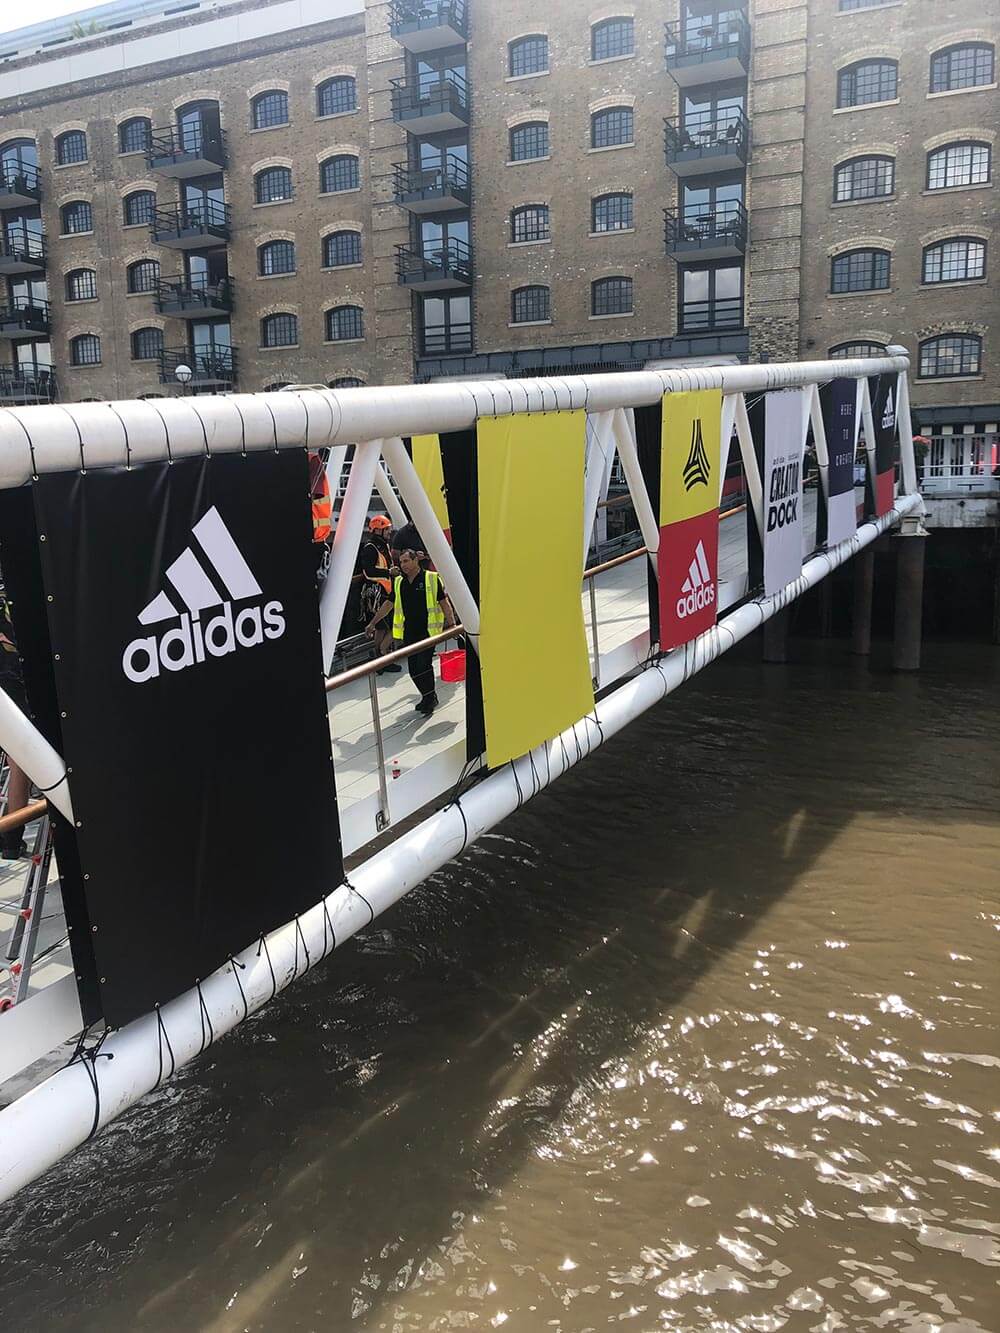 adidas football creator dock river thames butler's wharf pier